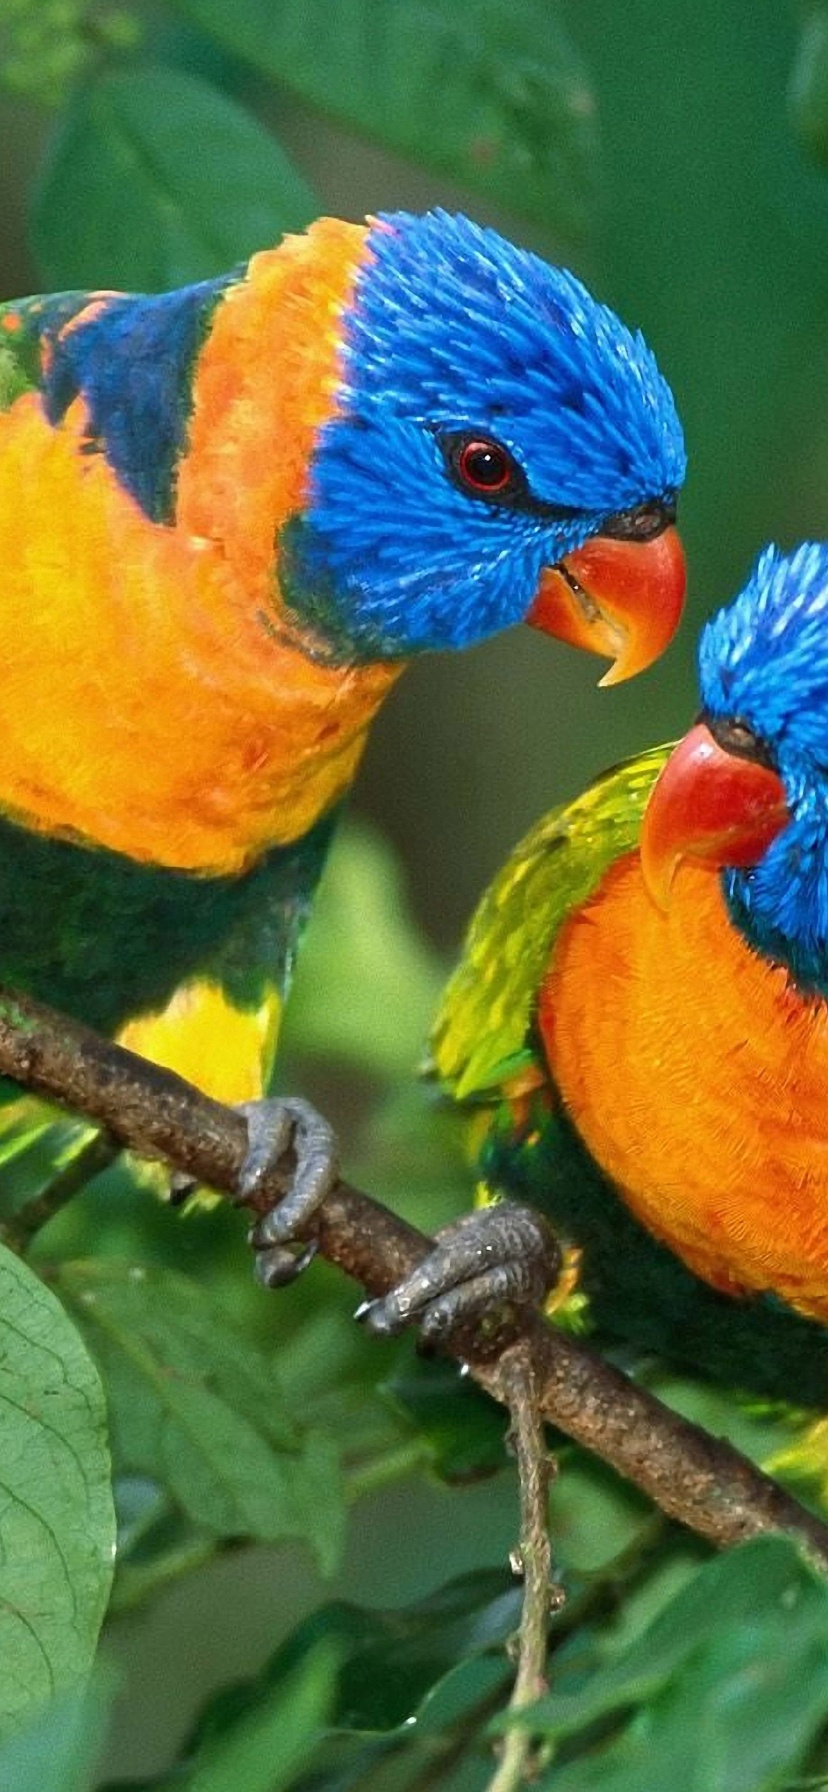 Two Colorful Parrots